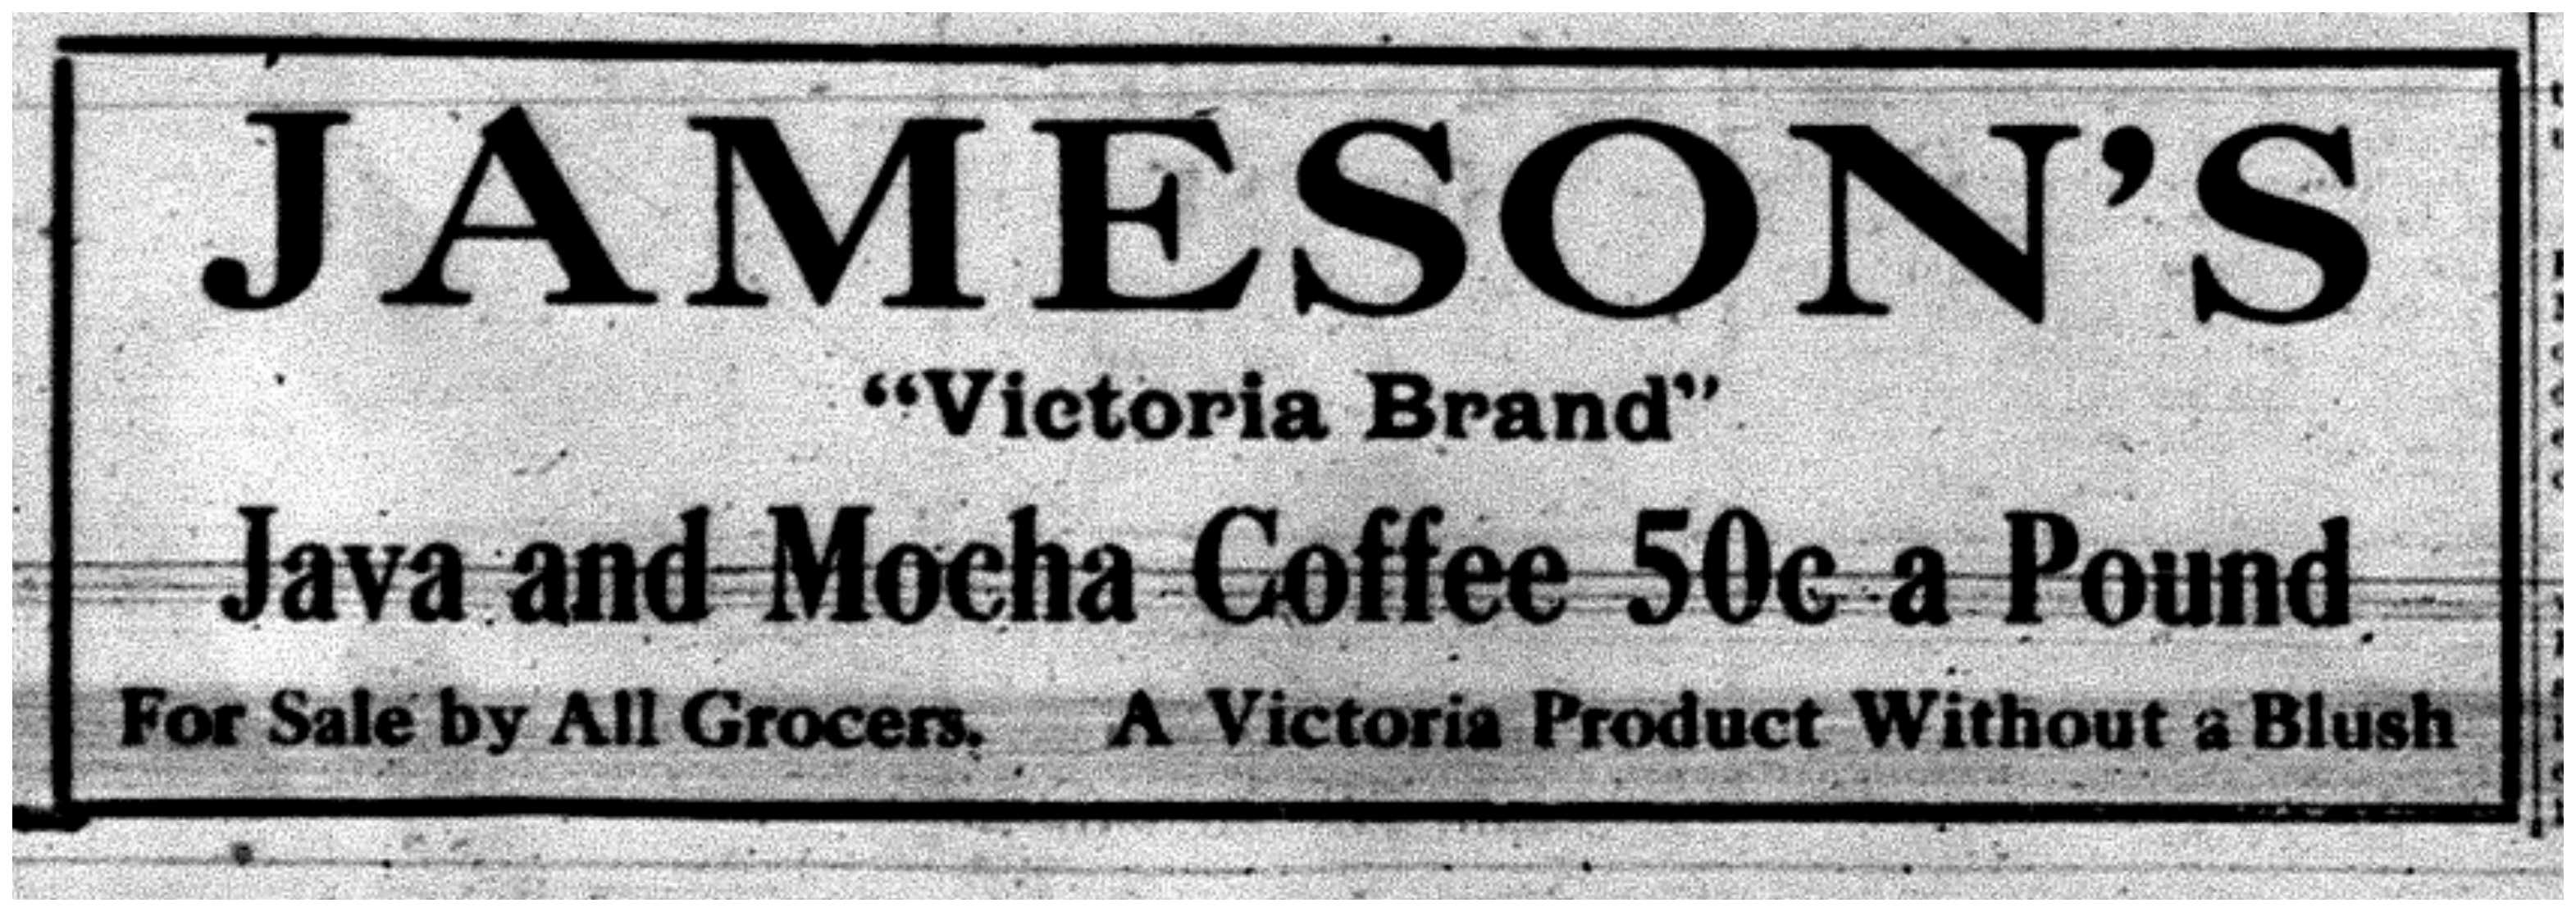 "Jameson's "Victoria Brand""